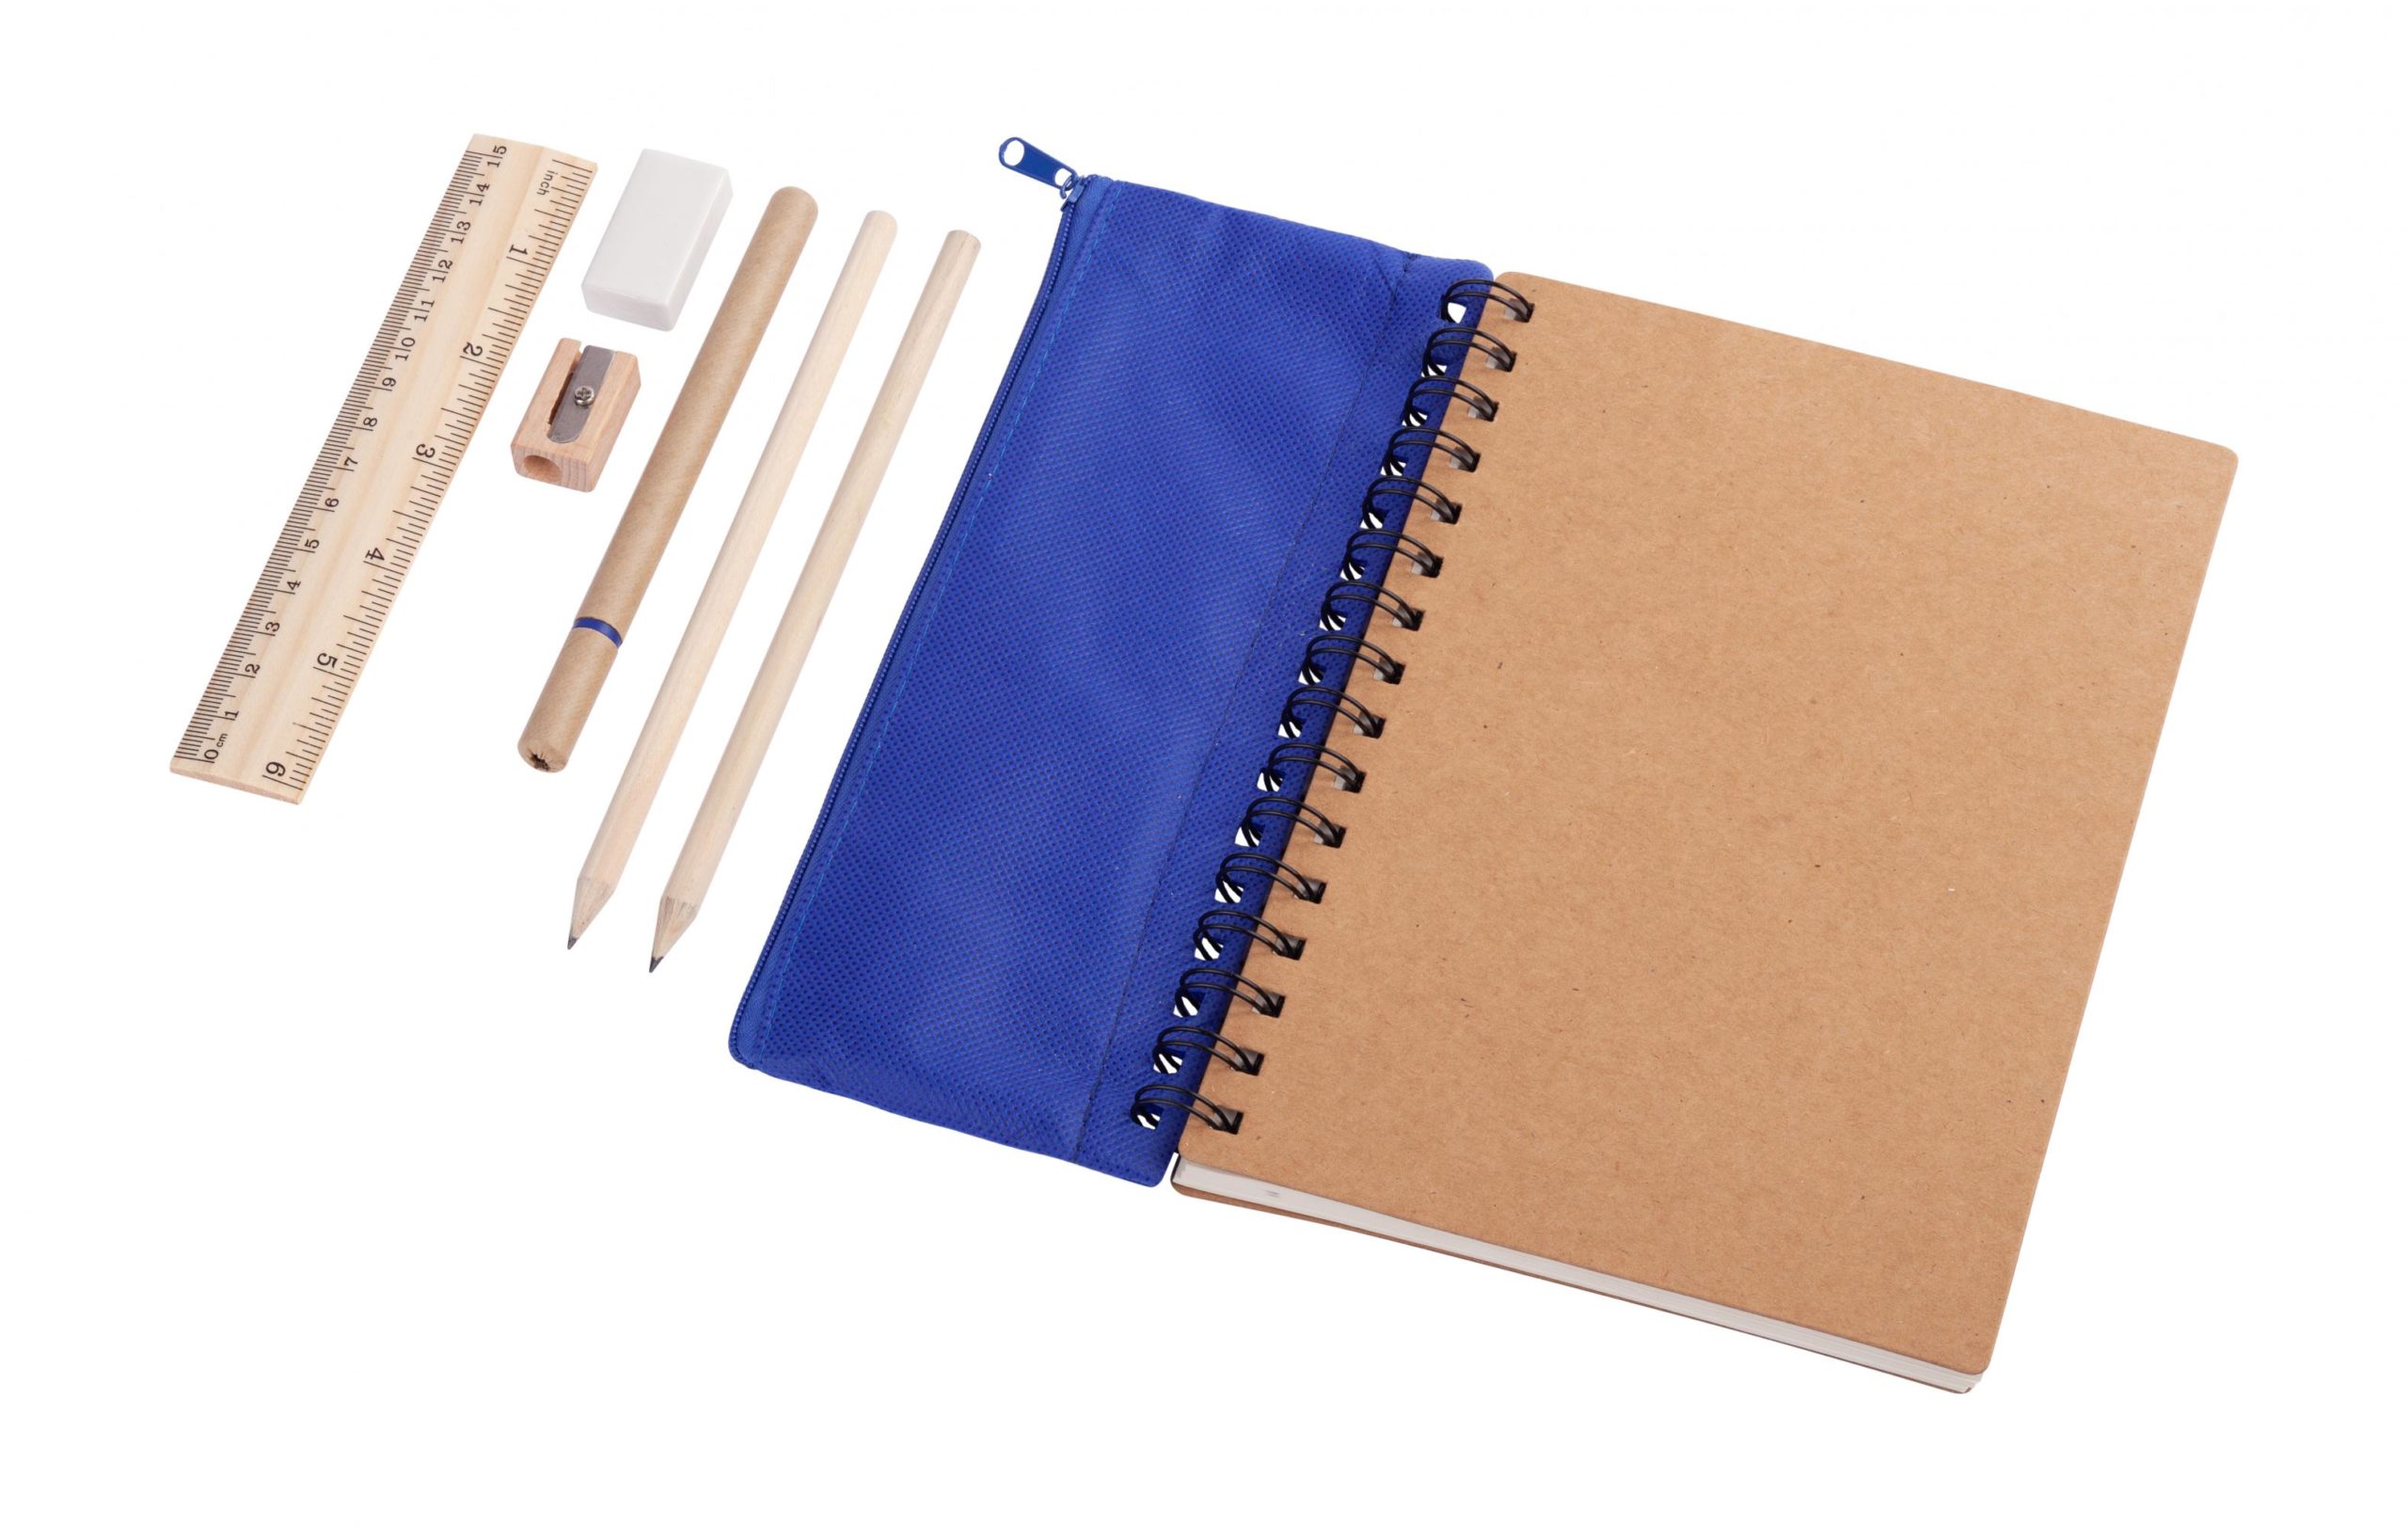 Блокнот "Full kit" с пеналом и канцелярскими принадлежностями, цвет синий, фото 2